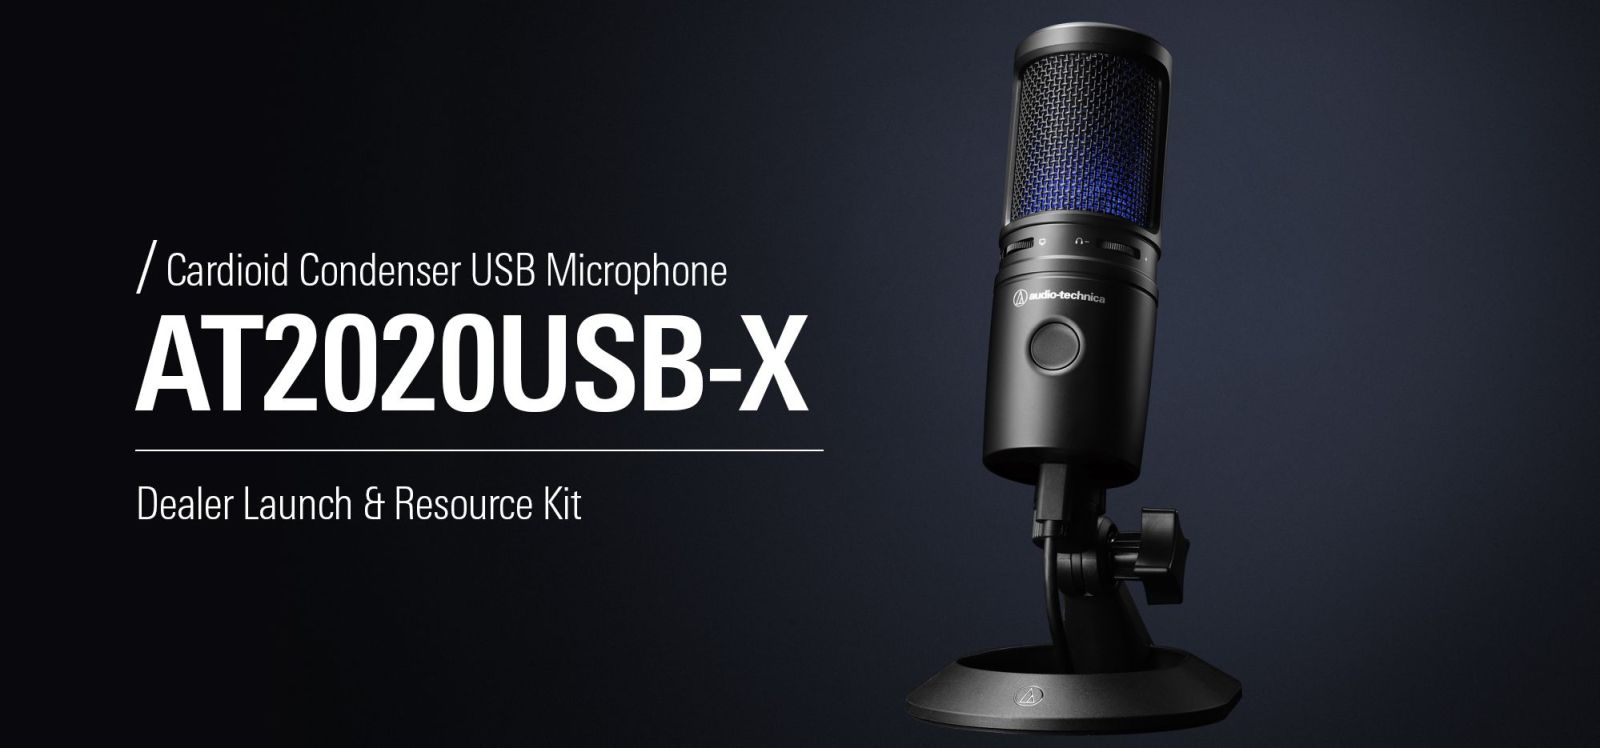 AT2020USB-X, Cardioid Condenser USB Microphone